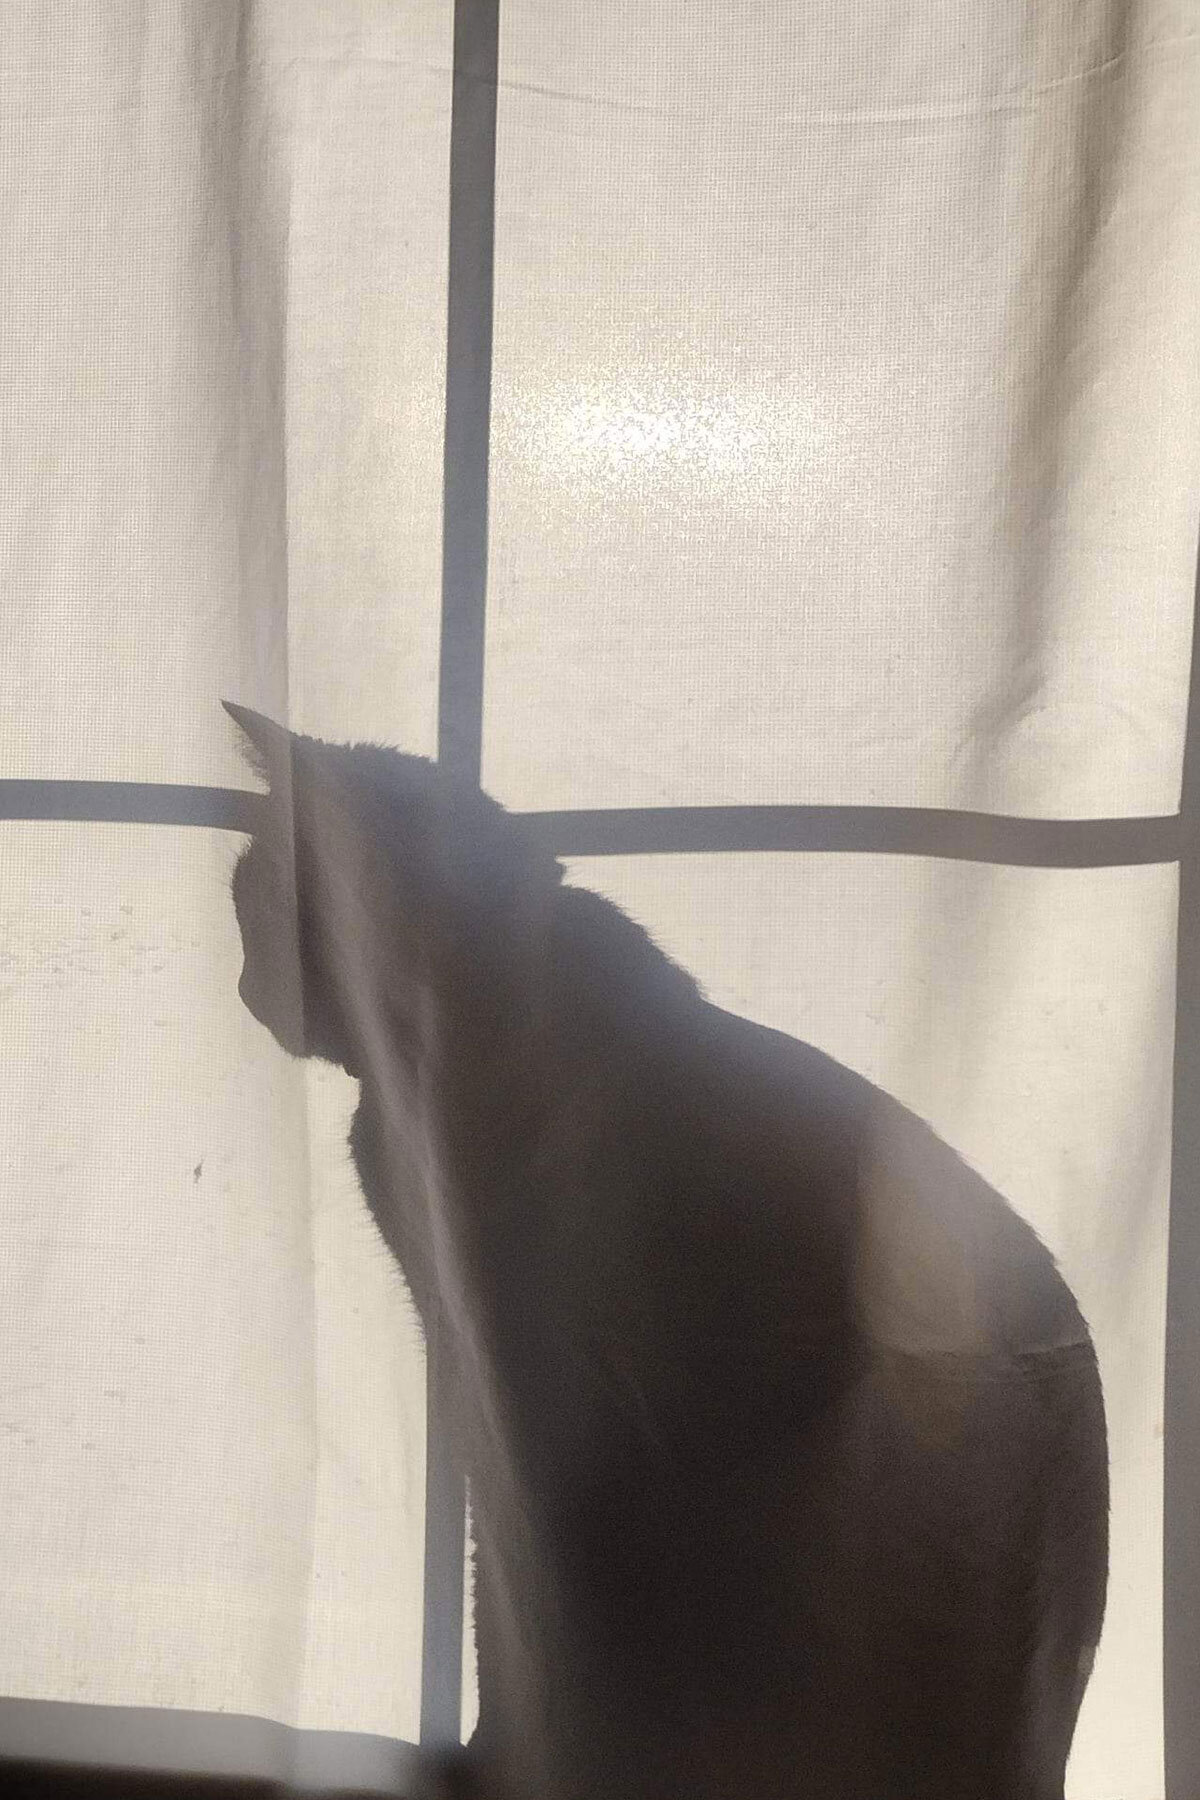 a black cat silhouette behind an off-white curtain